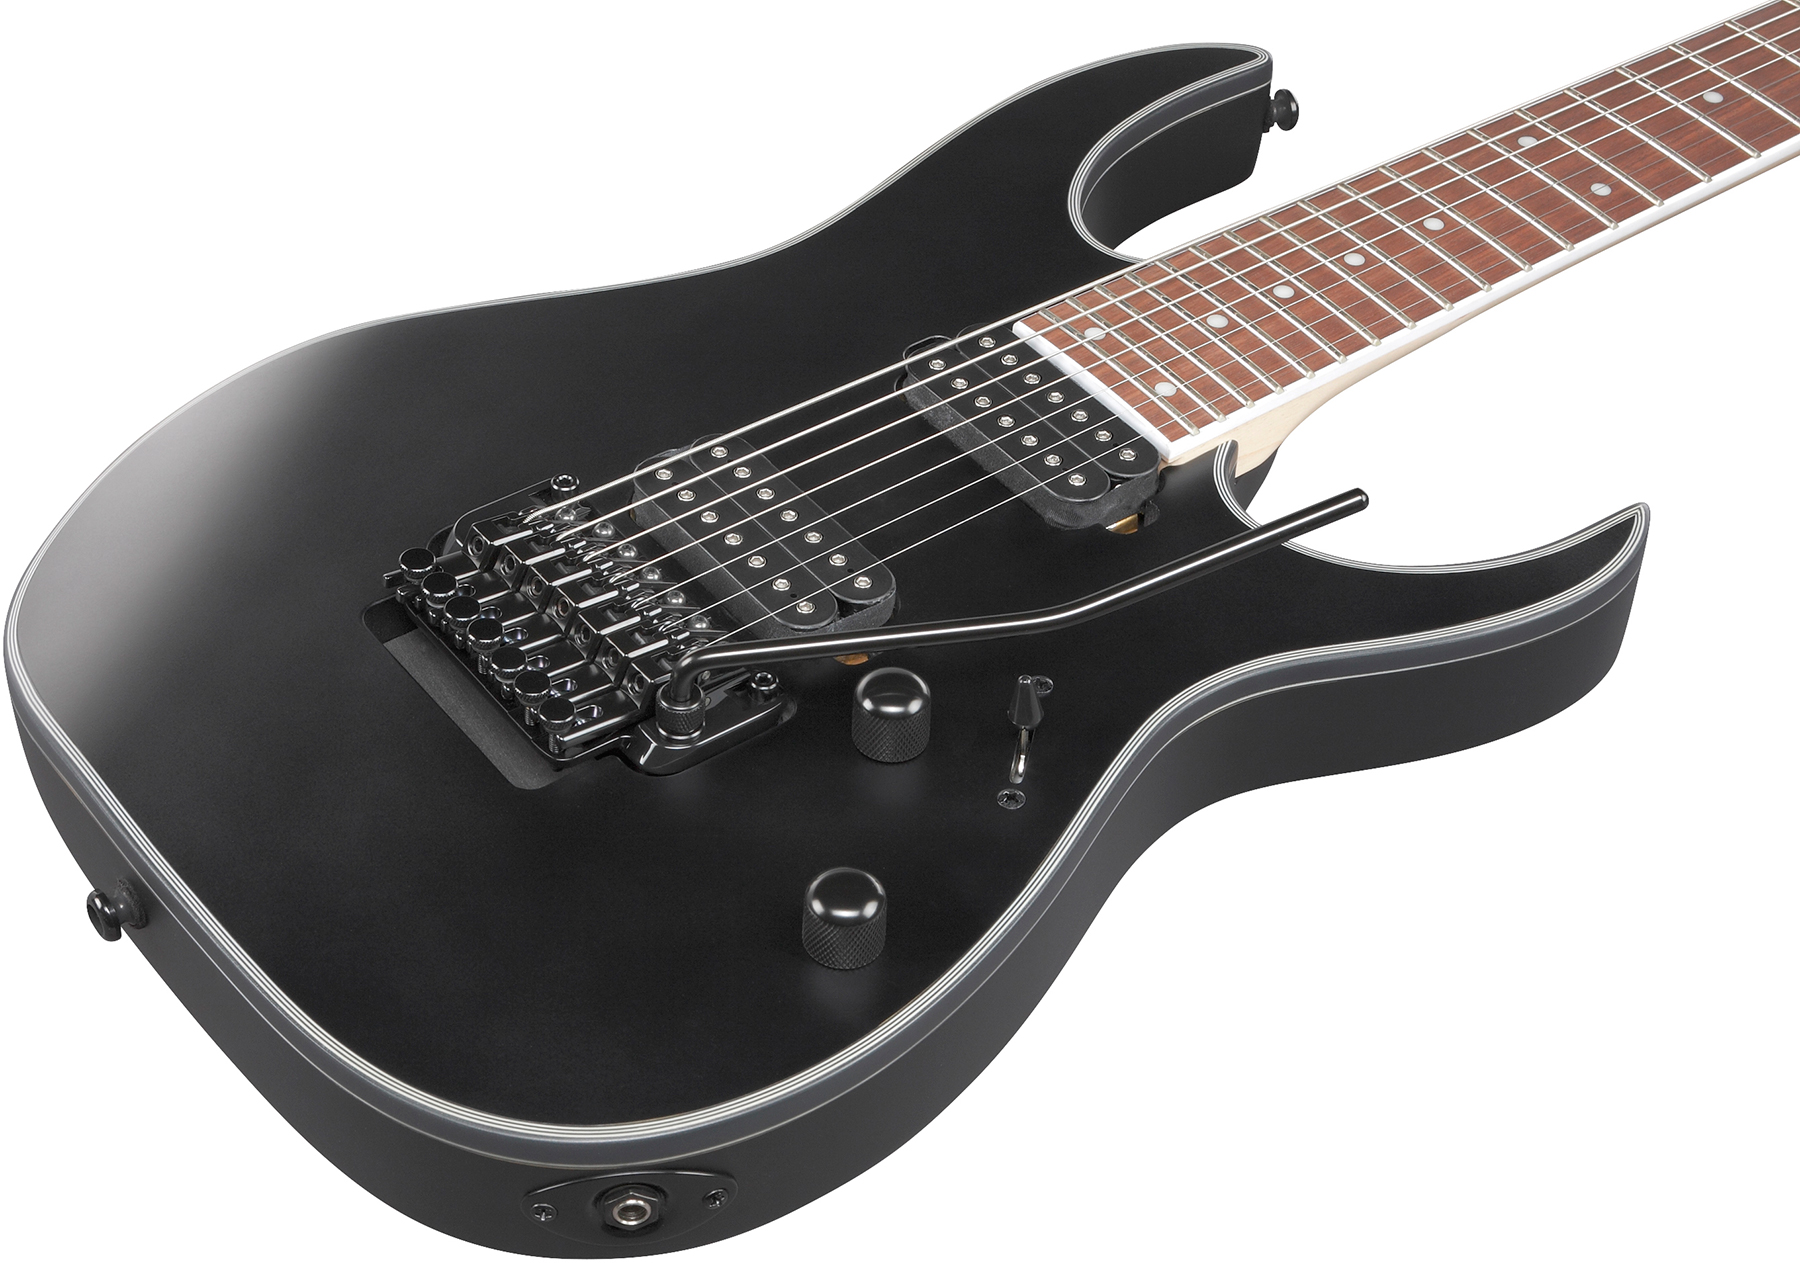 Ibanez Rg7320ex Bkf 7c 2h Fr Jat - Black Flat - 7 string electric guitar - Variation 2